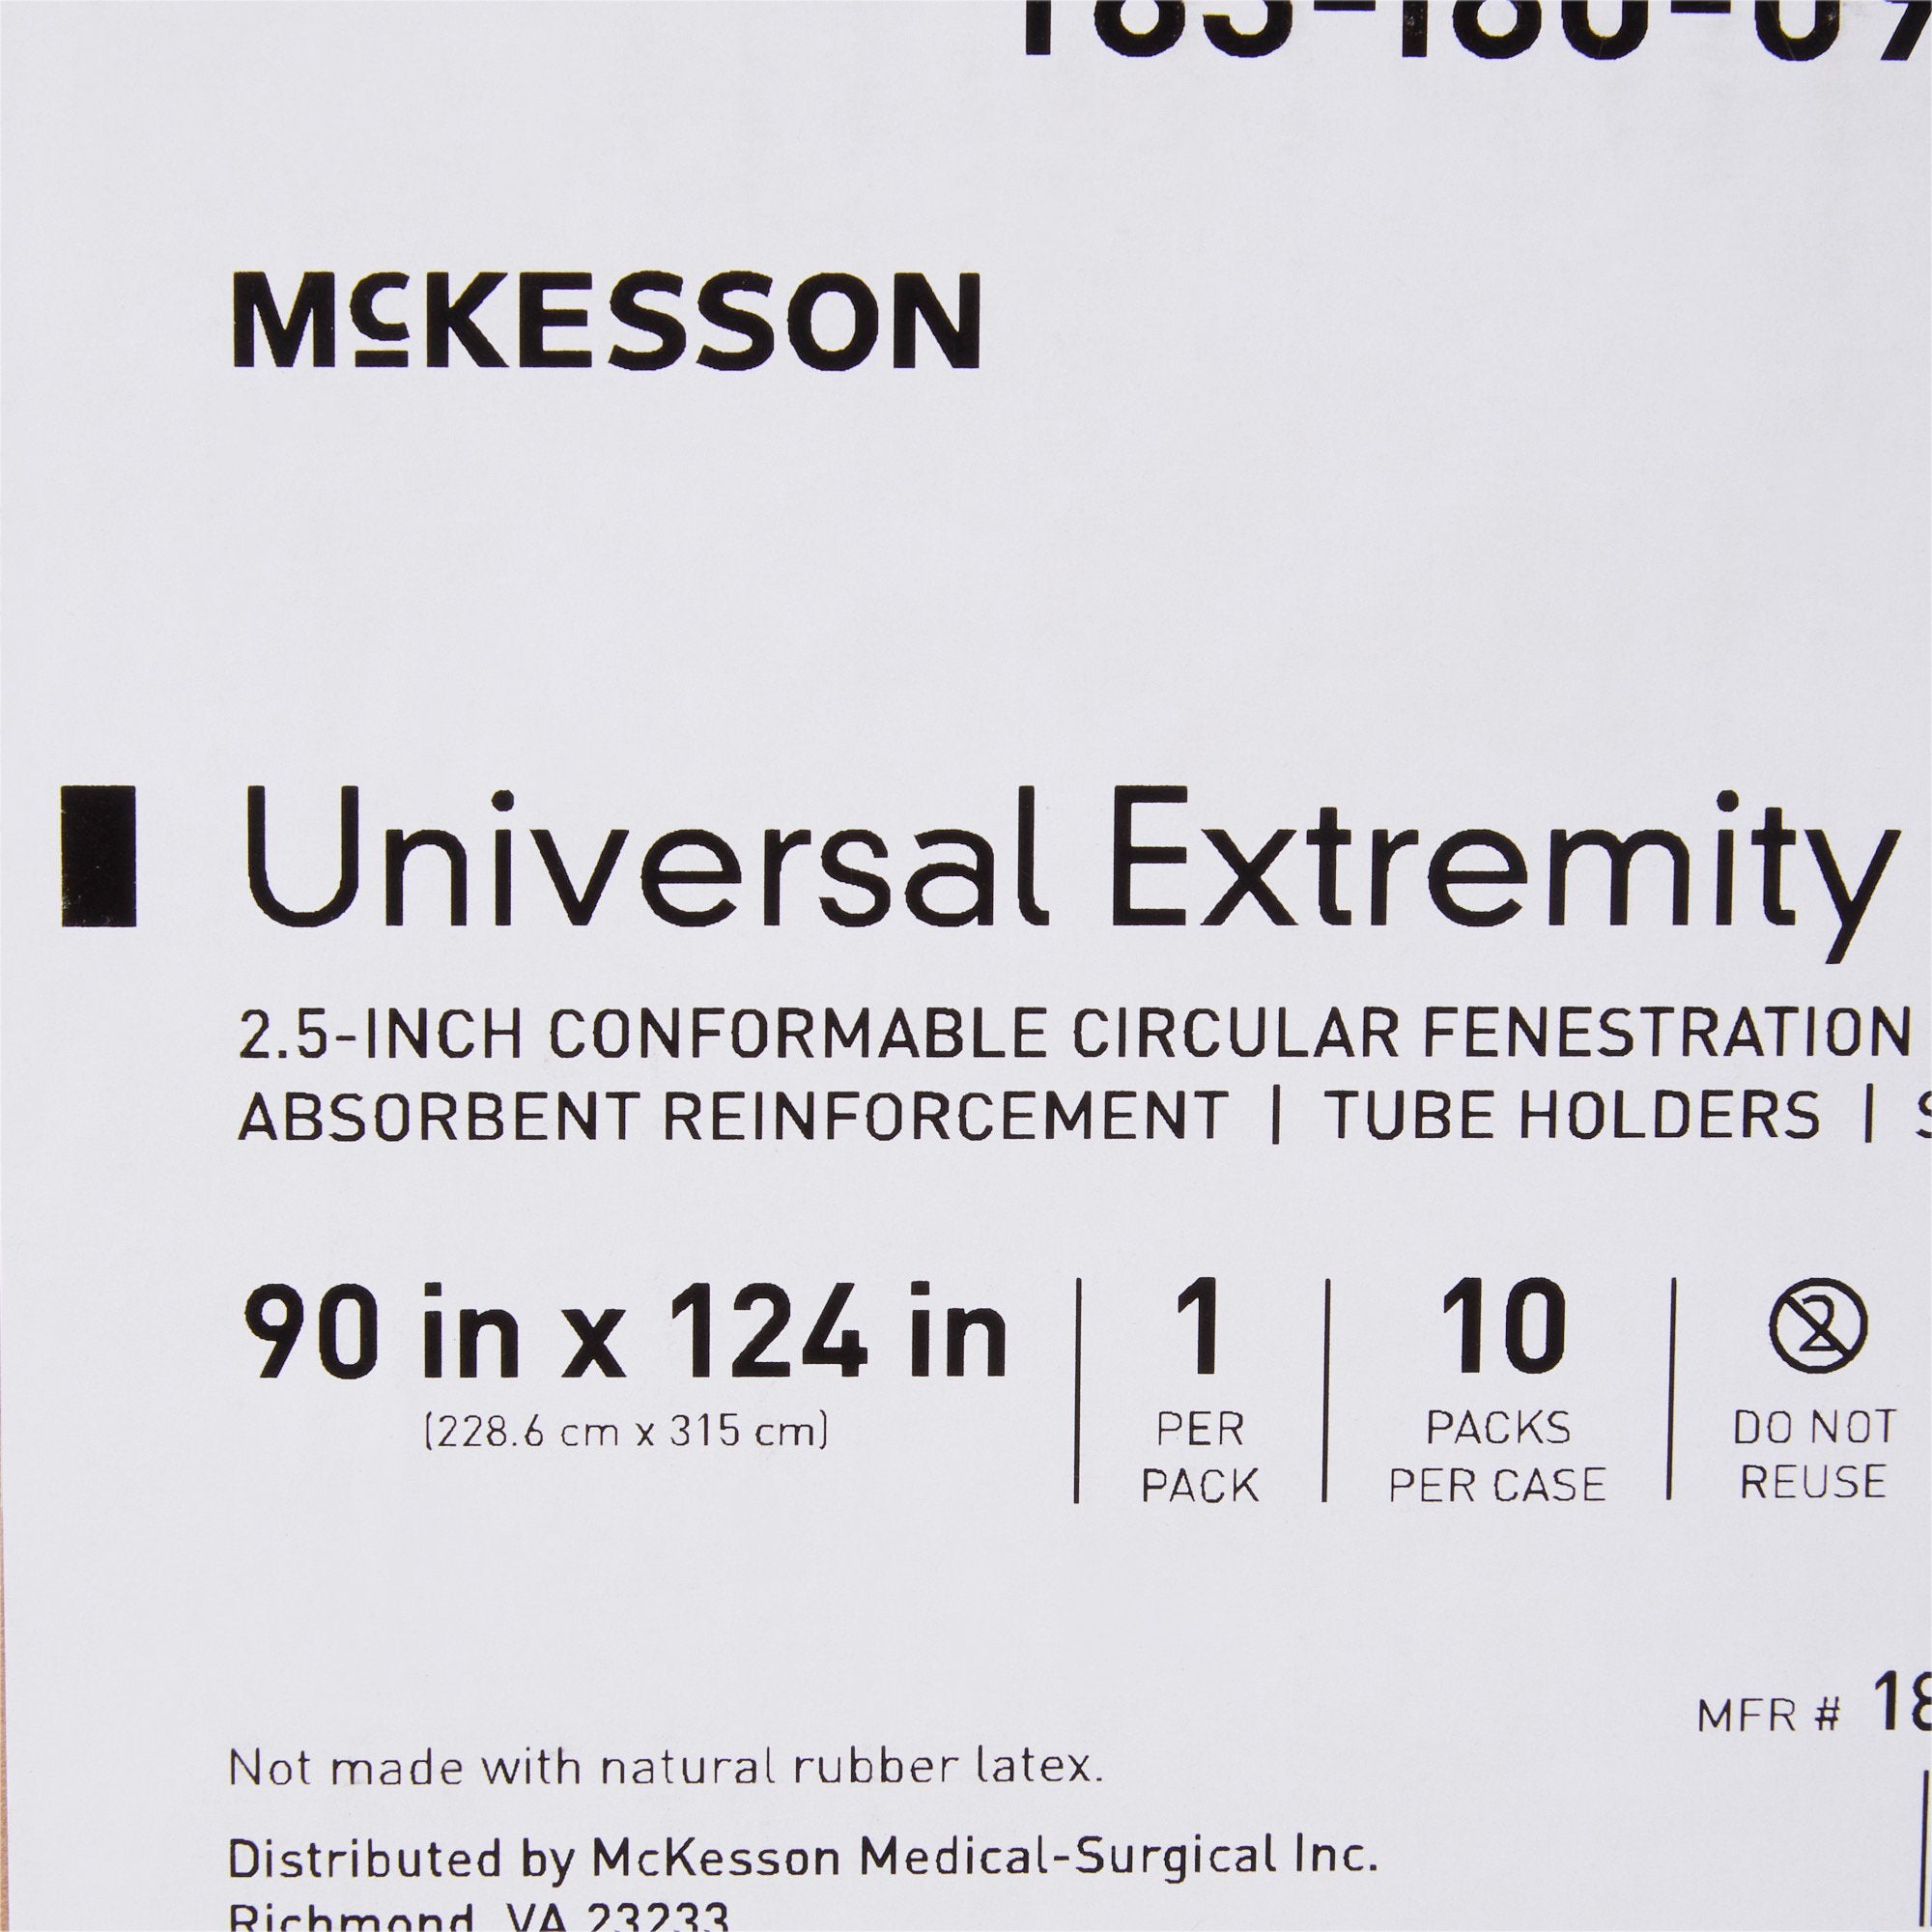 McKesson Sterile Universal Extremity Orthopedic Drape, 90 x 124 Inch (1 Unit)